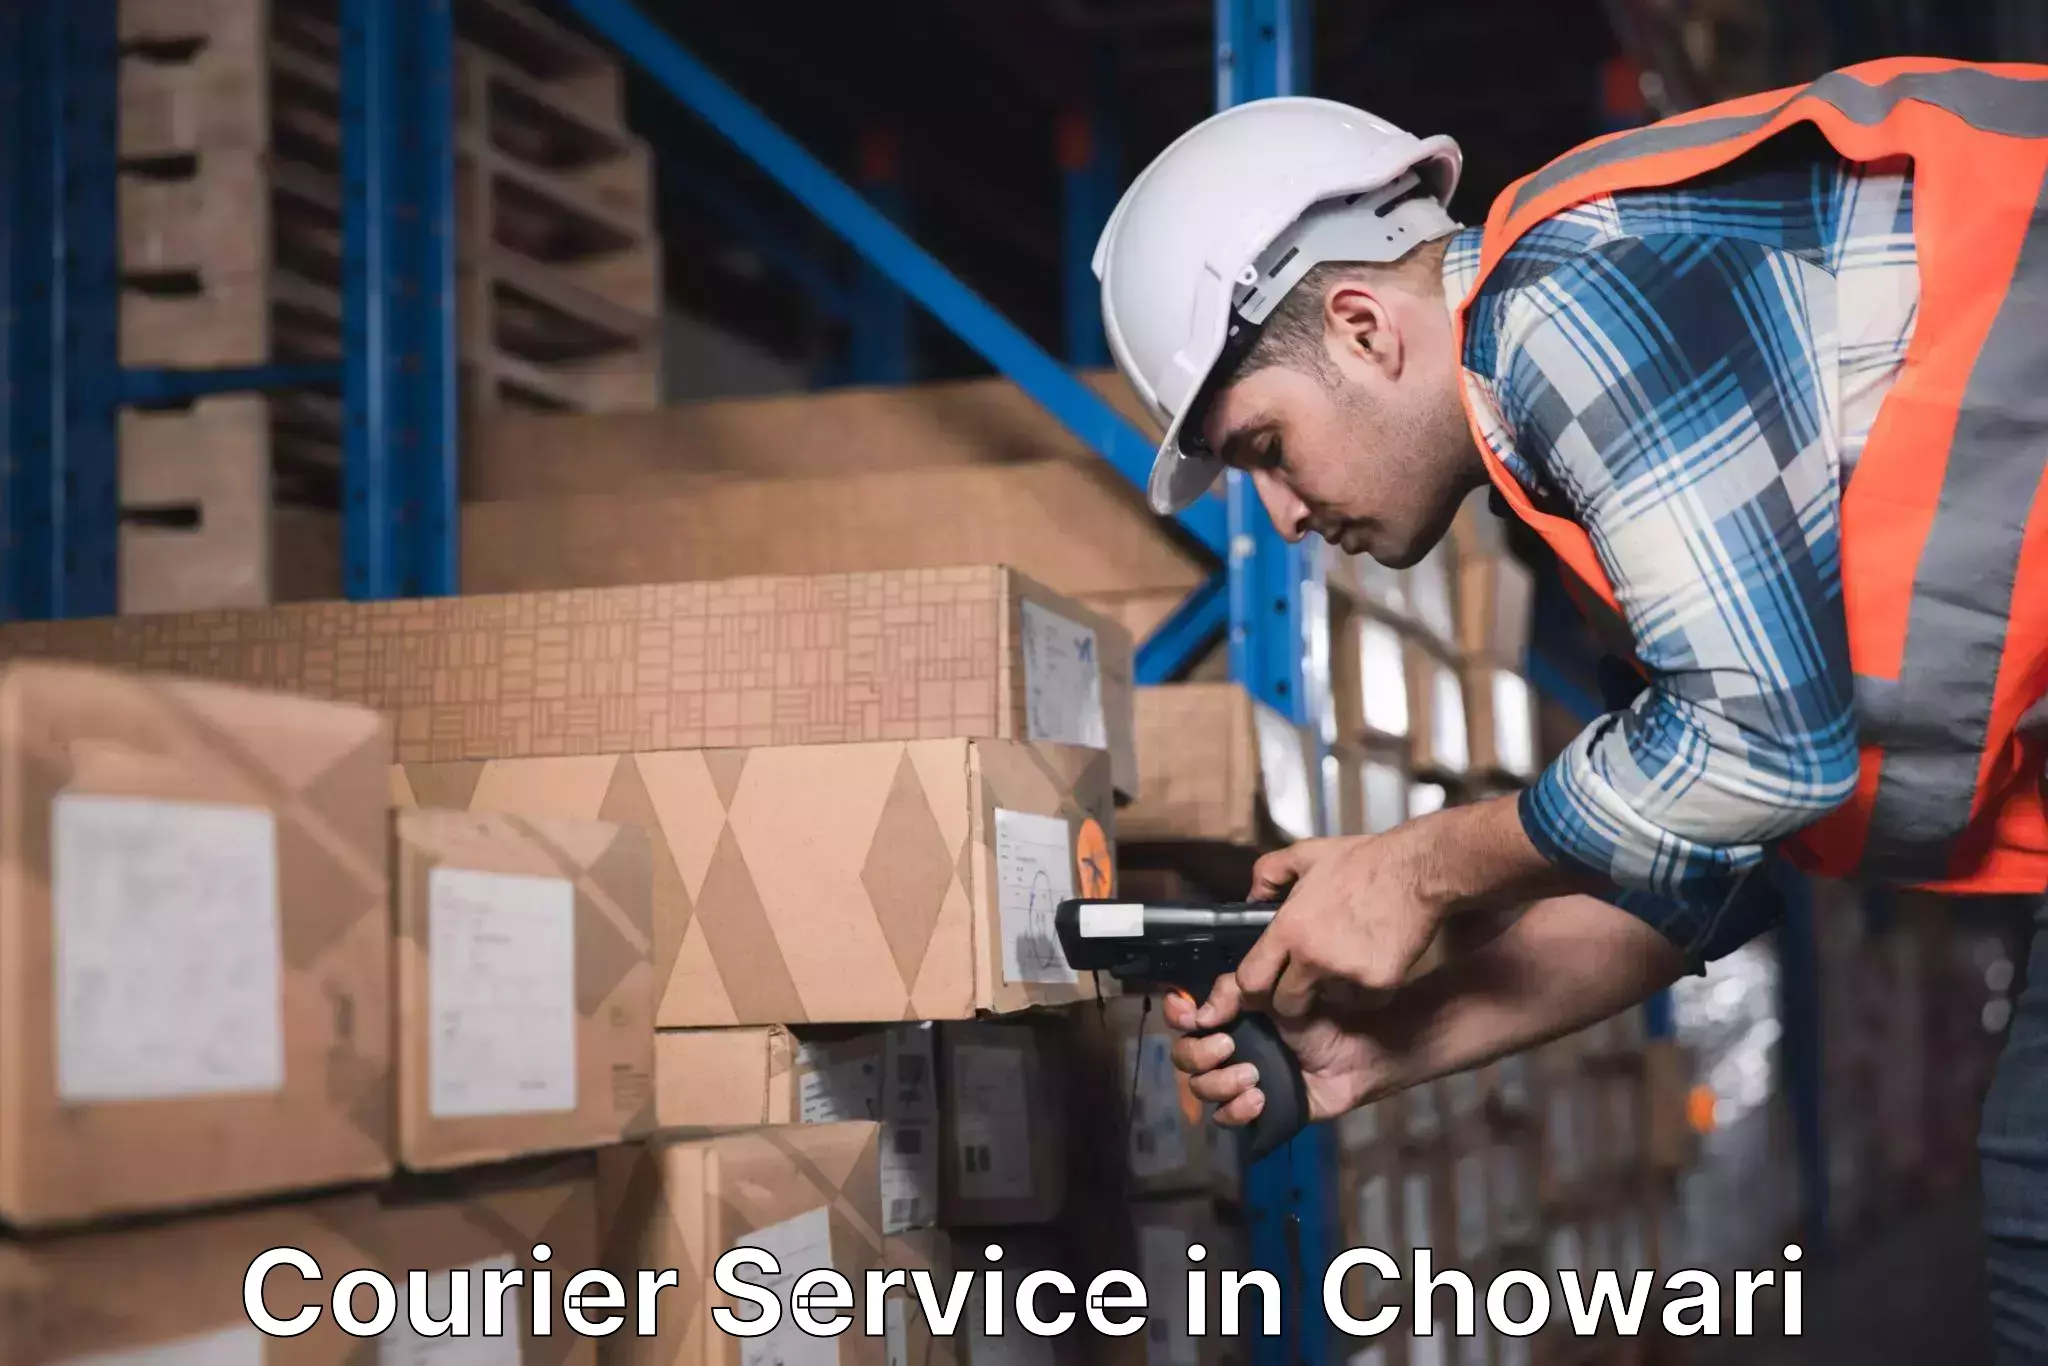 Courier service comparison in Chowari